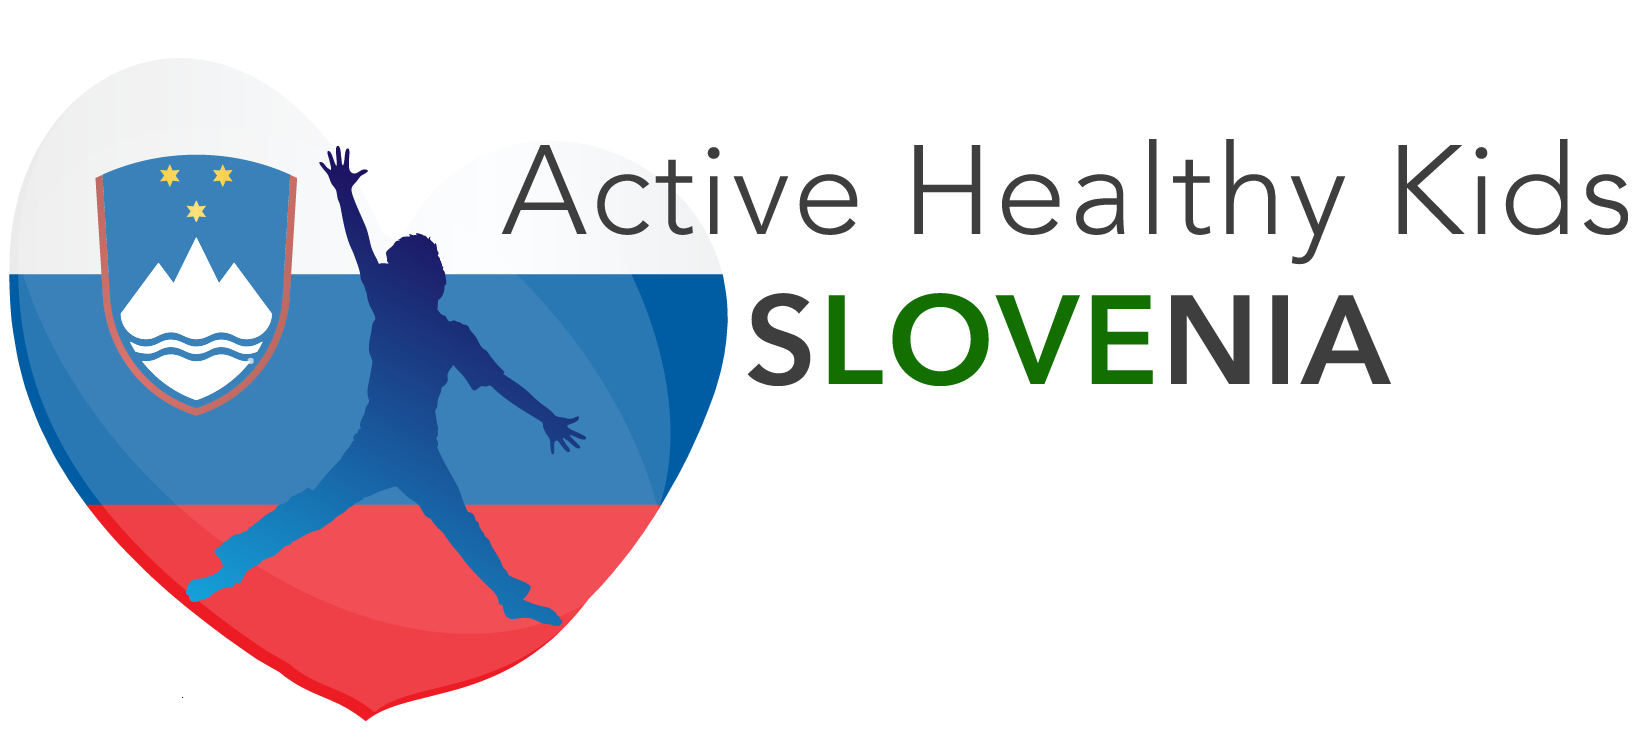 Health activities. Active Group Словения. Словения менеджмент. Целе Словения лого. Девиз Словении.